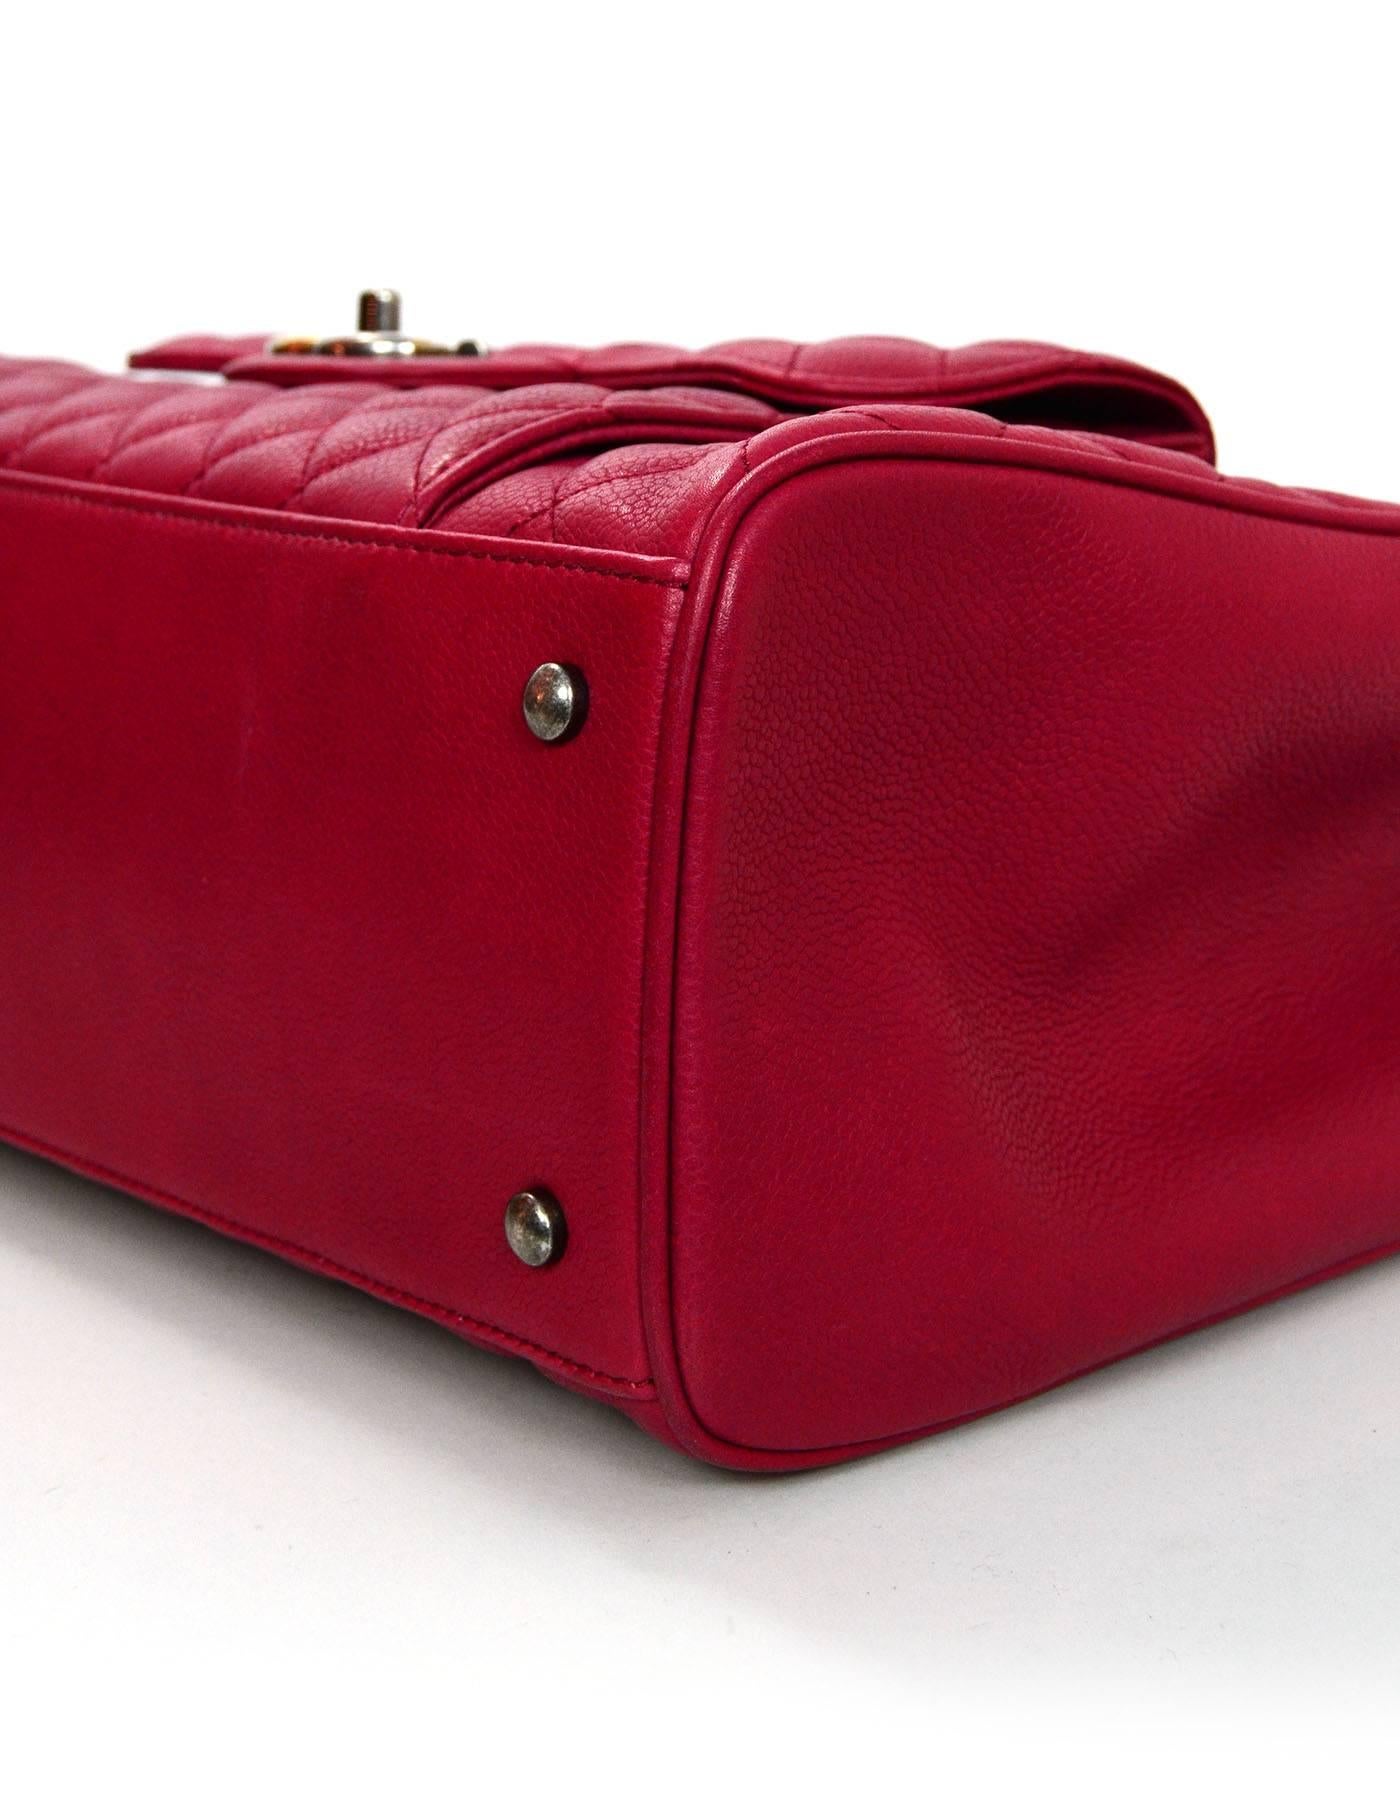 handbag with front pocket